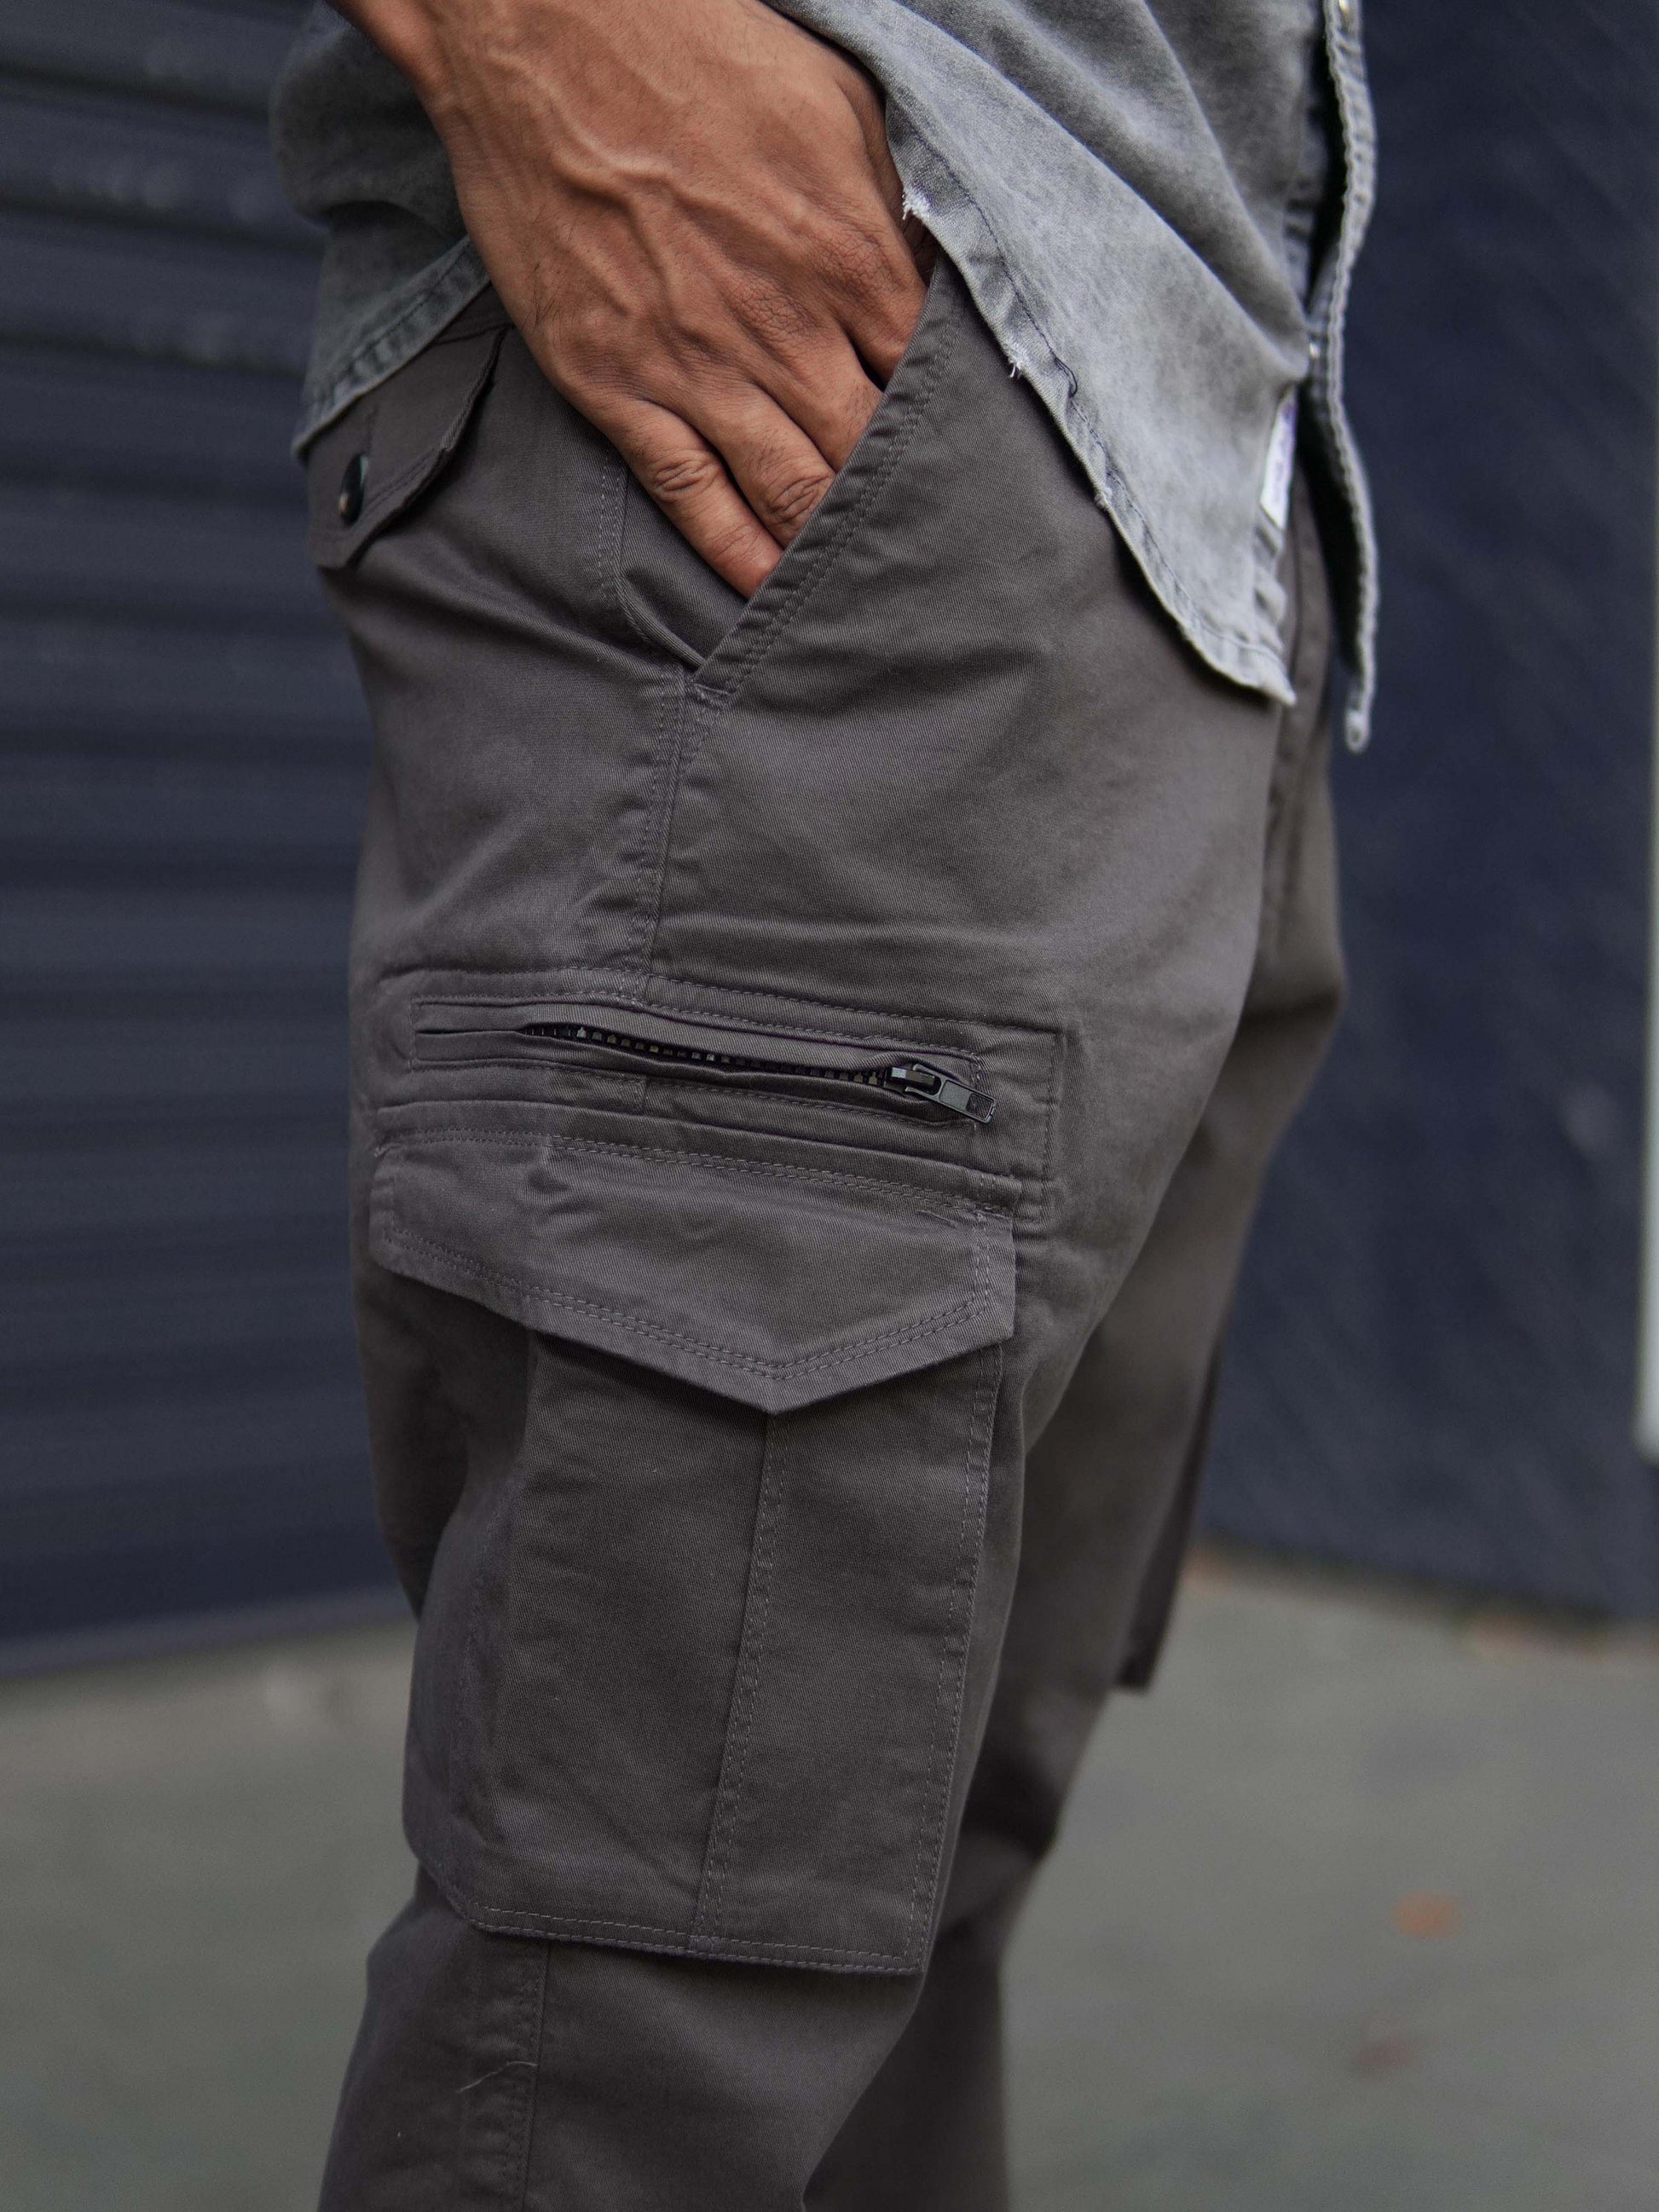 Charcoal Grey Stylish Cargo Pants Mens